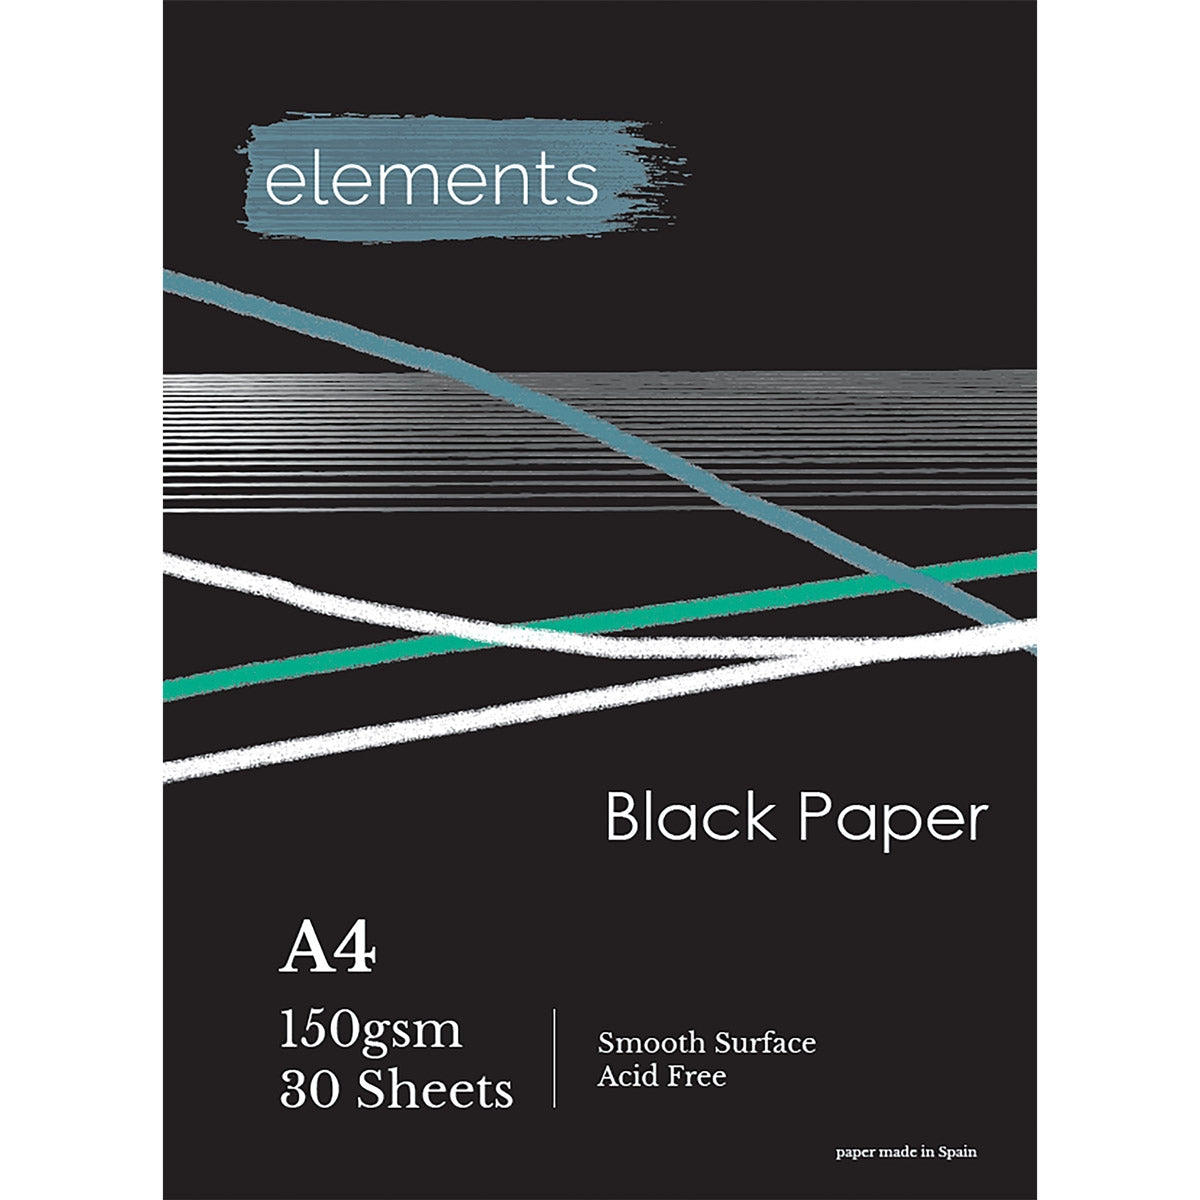 Elemente - Black Paper Pad Gummed A4